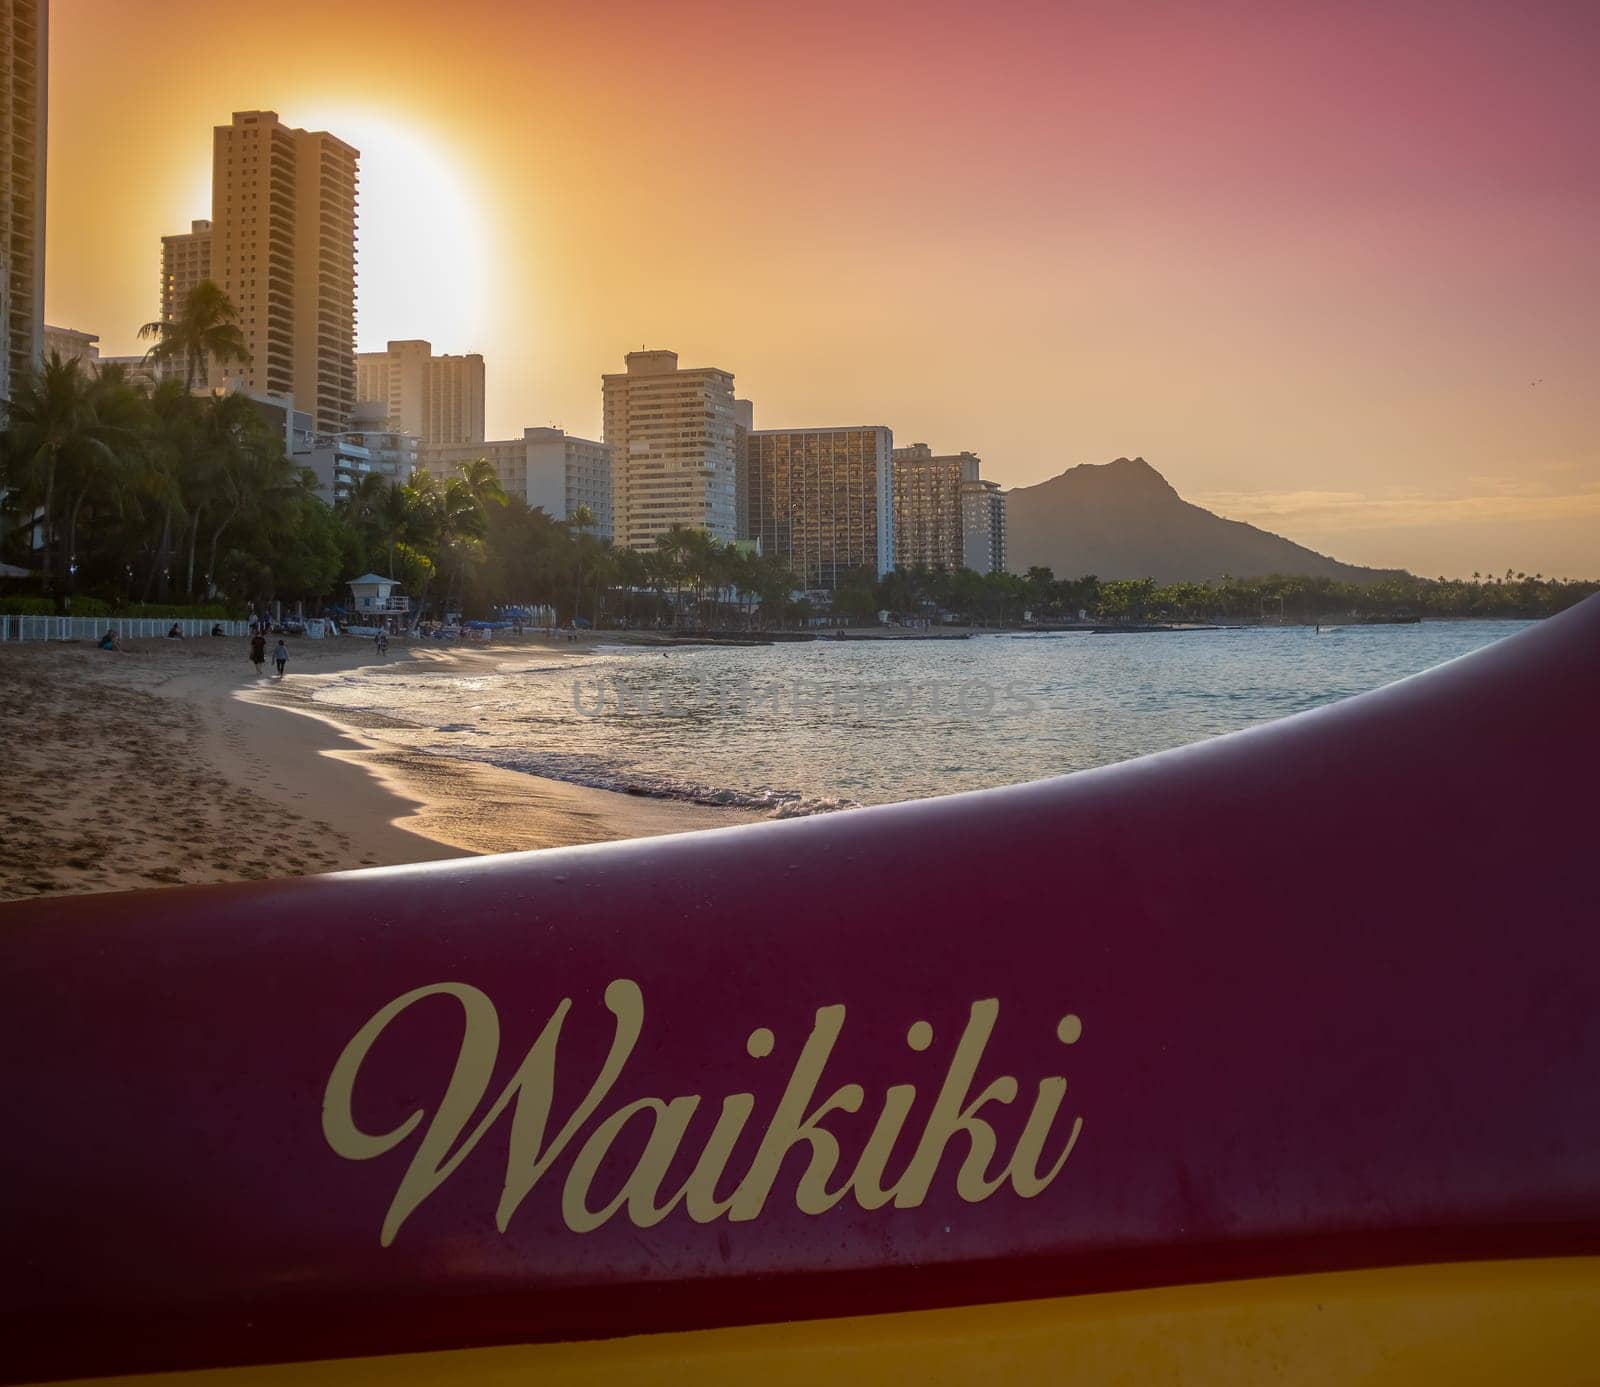 A Traditional Hawaiian Outrigger Canoe On Waikiki Beach At Sunset